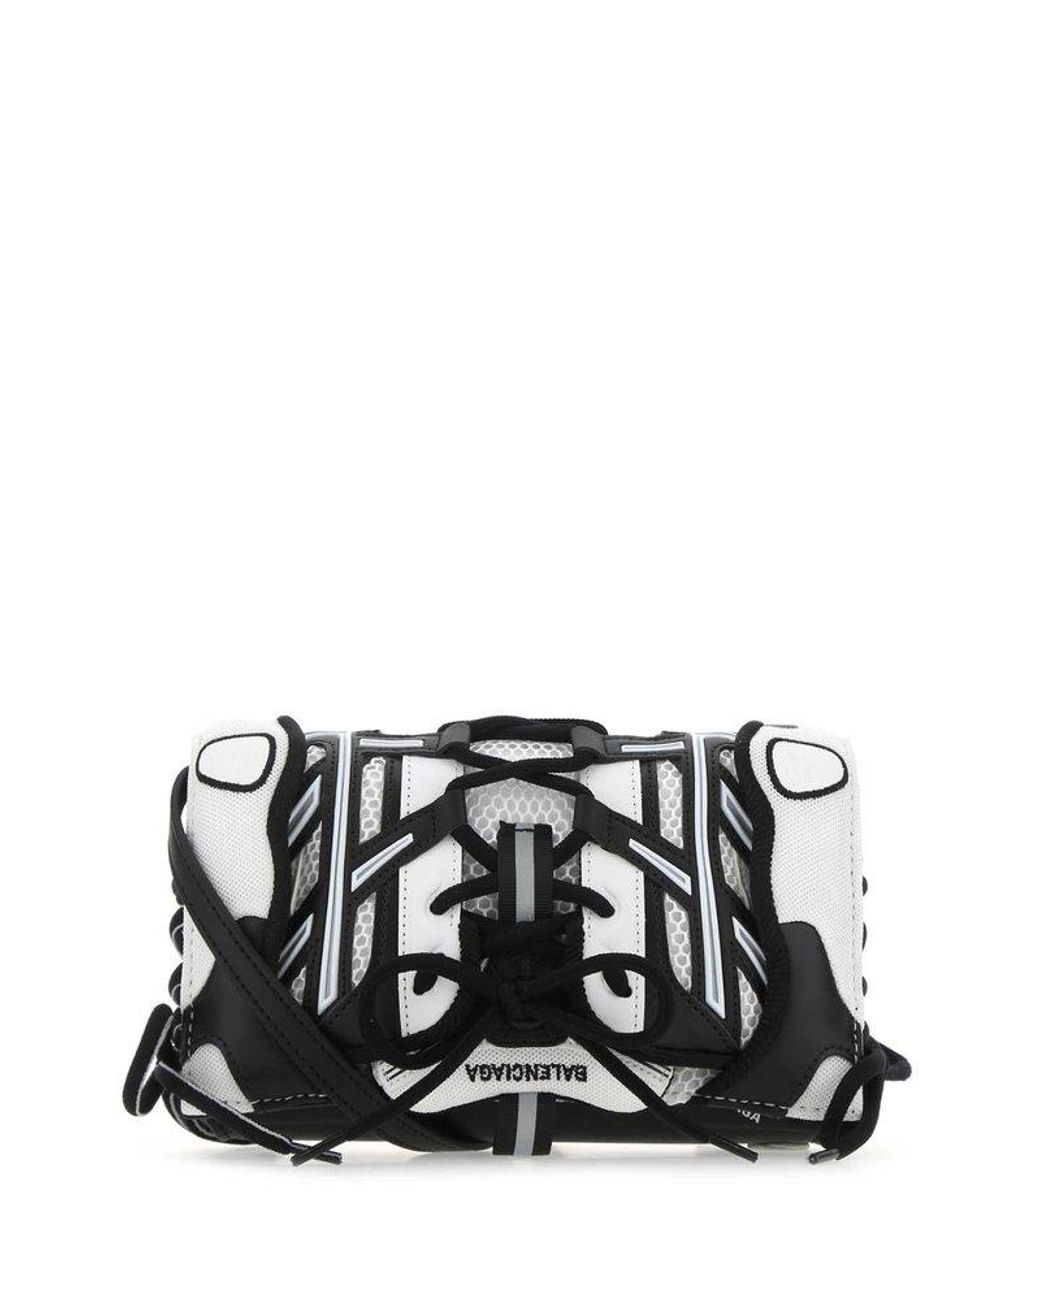 Balenciaga Sneakerhead Phone Holder Bag in Black | Lyst